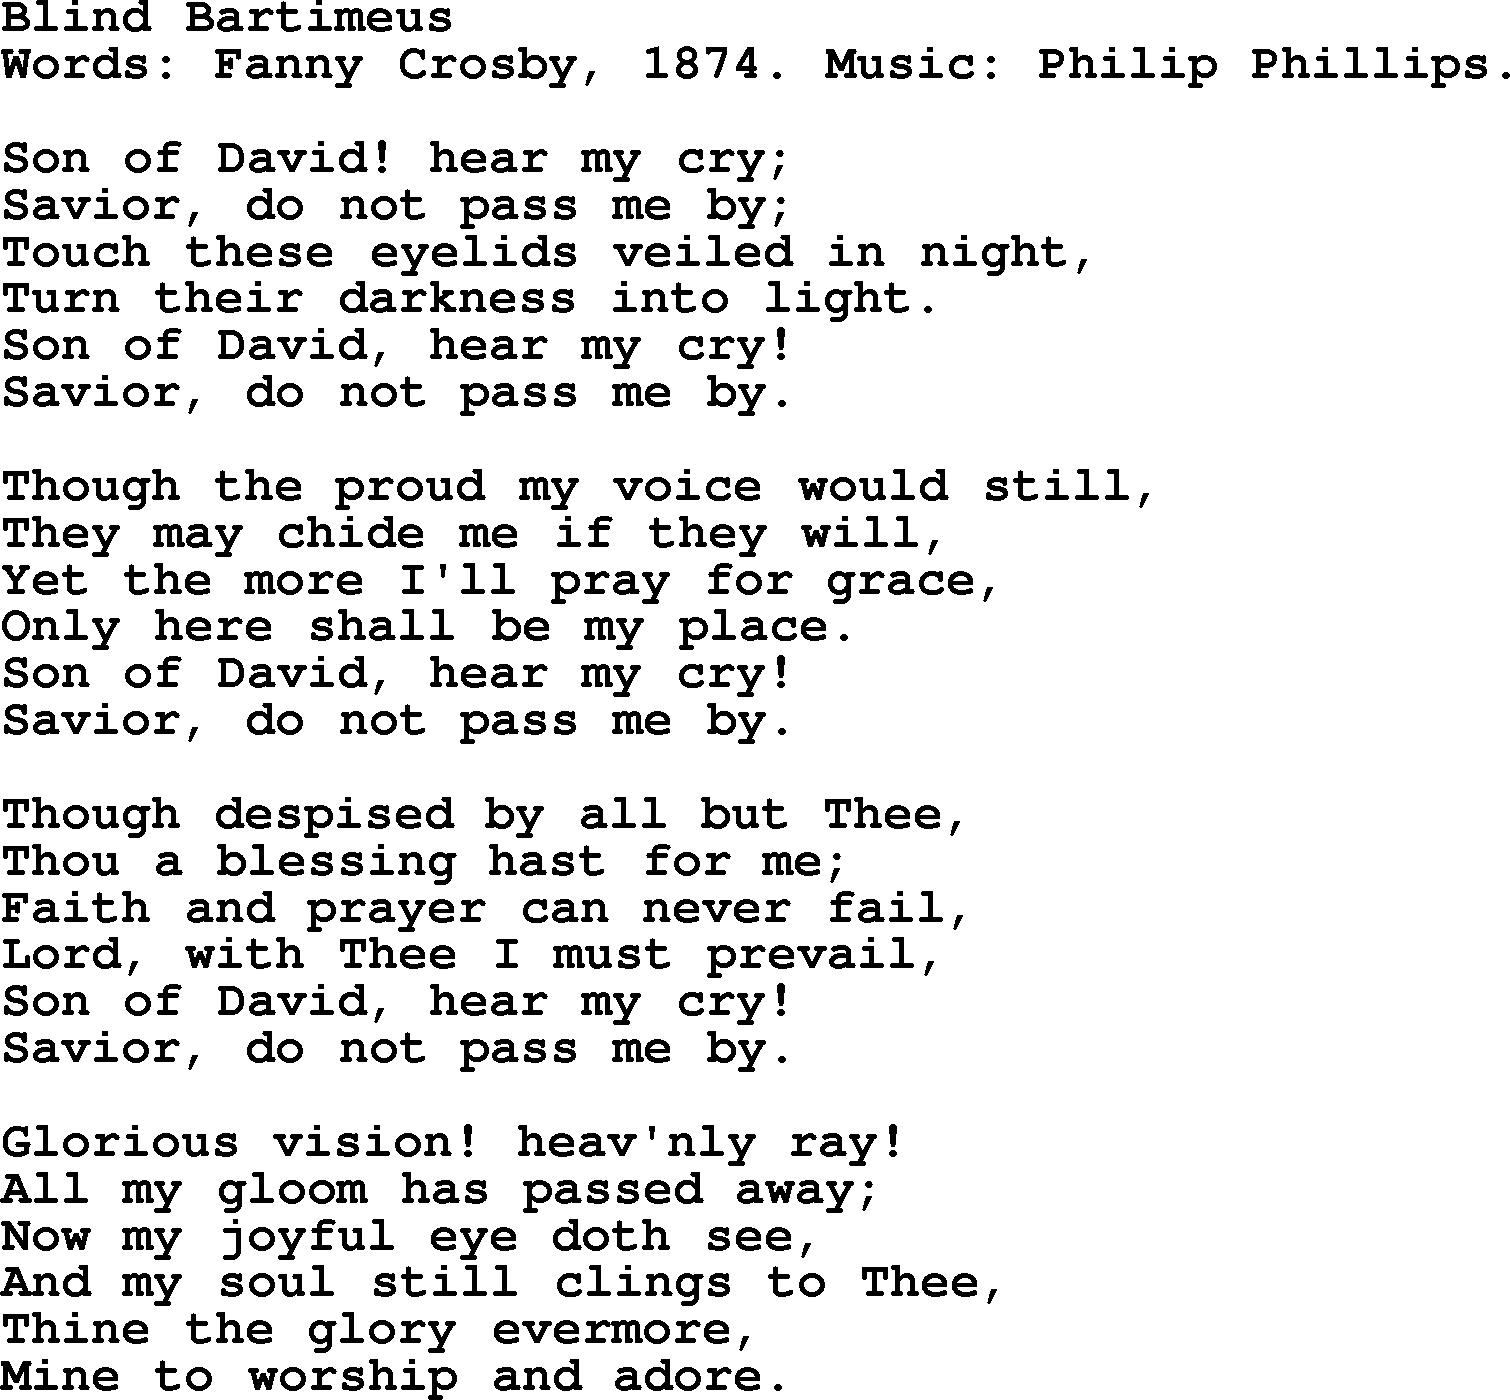 Fanny Crosby song: Blind Bartimeus, lyrics